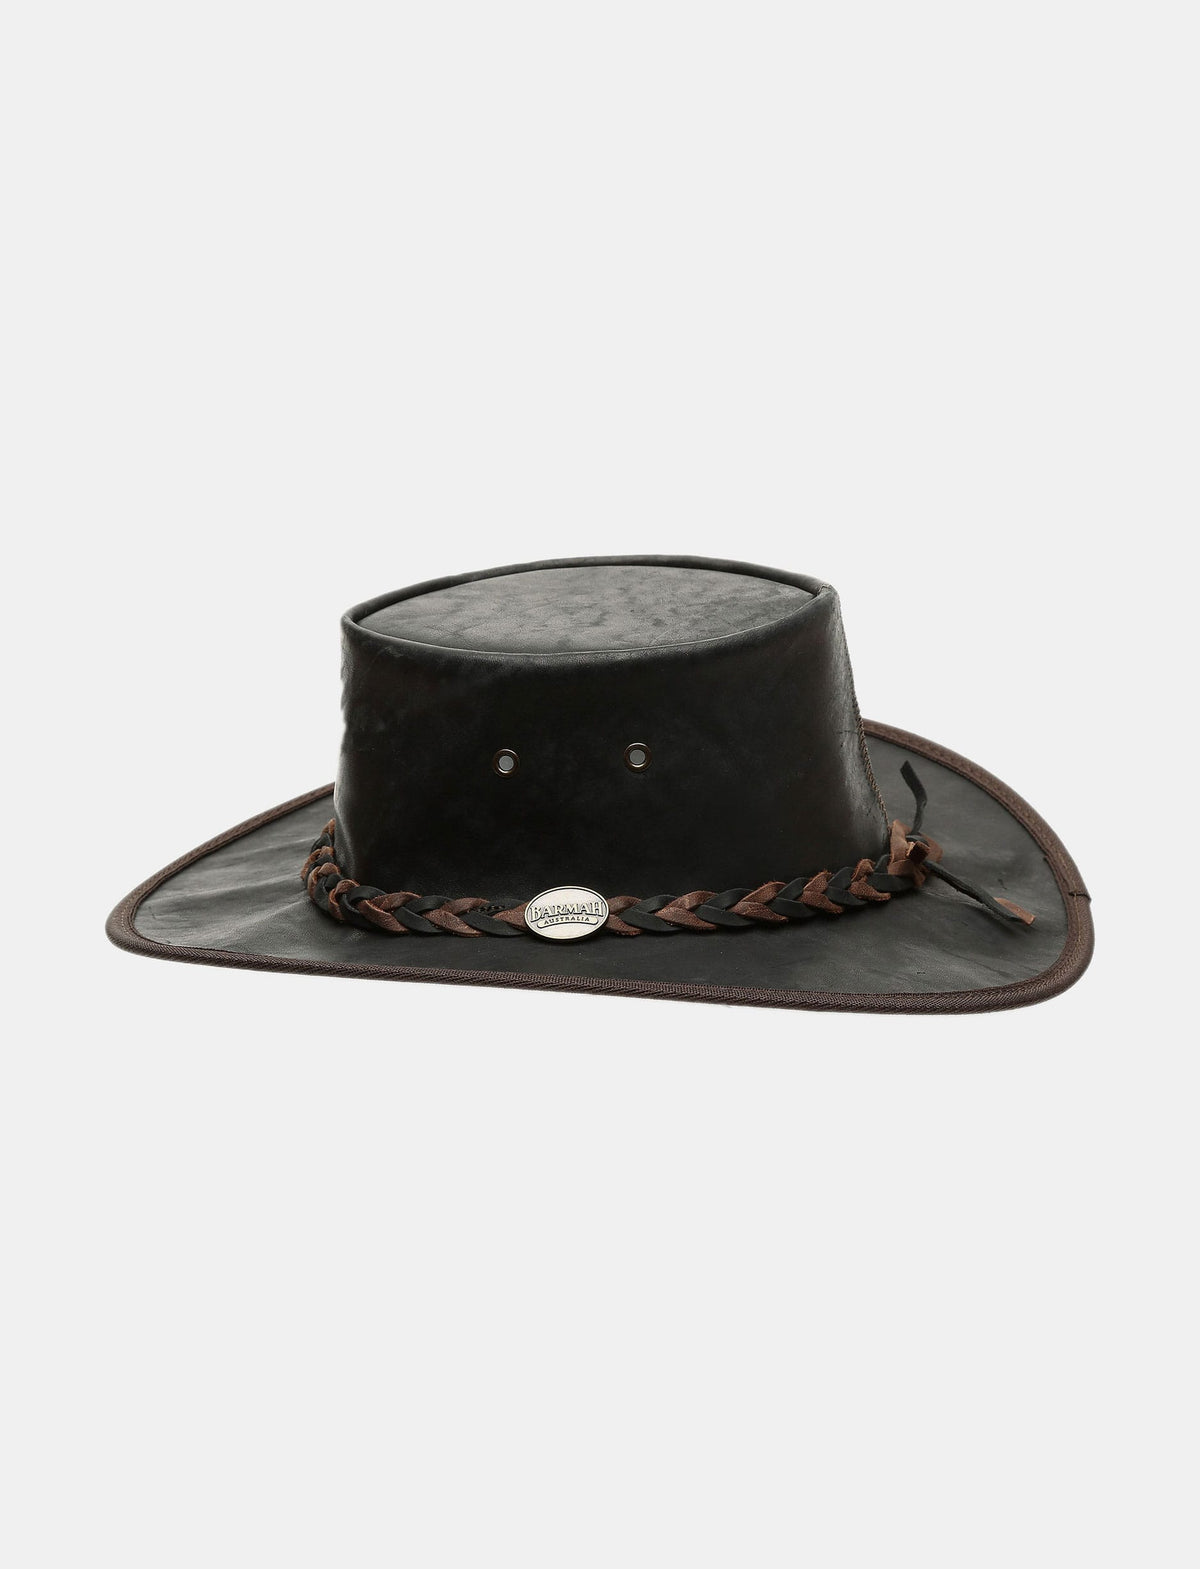 Barmah 1018 IS - כובע בוקרים רחב שוליים ברמה מעור קנגורו אמיתי-Barmah-S-נאקו